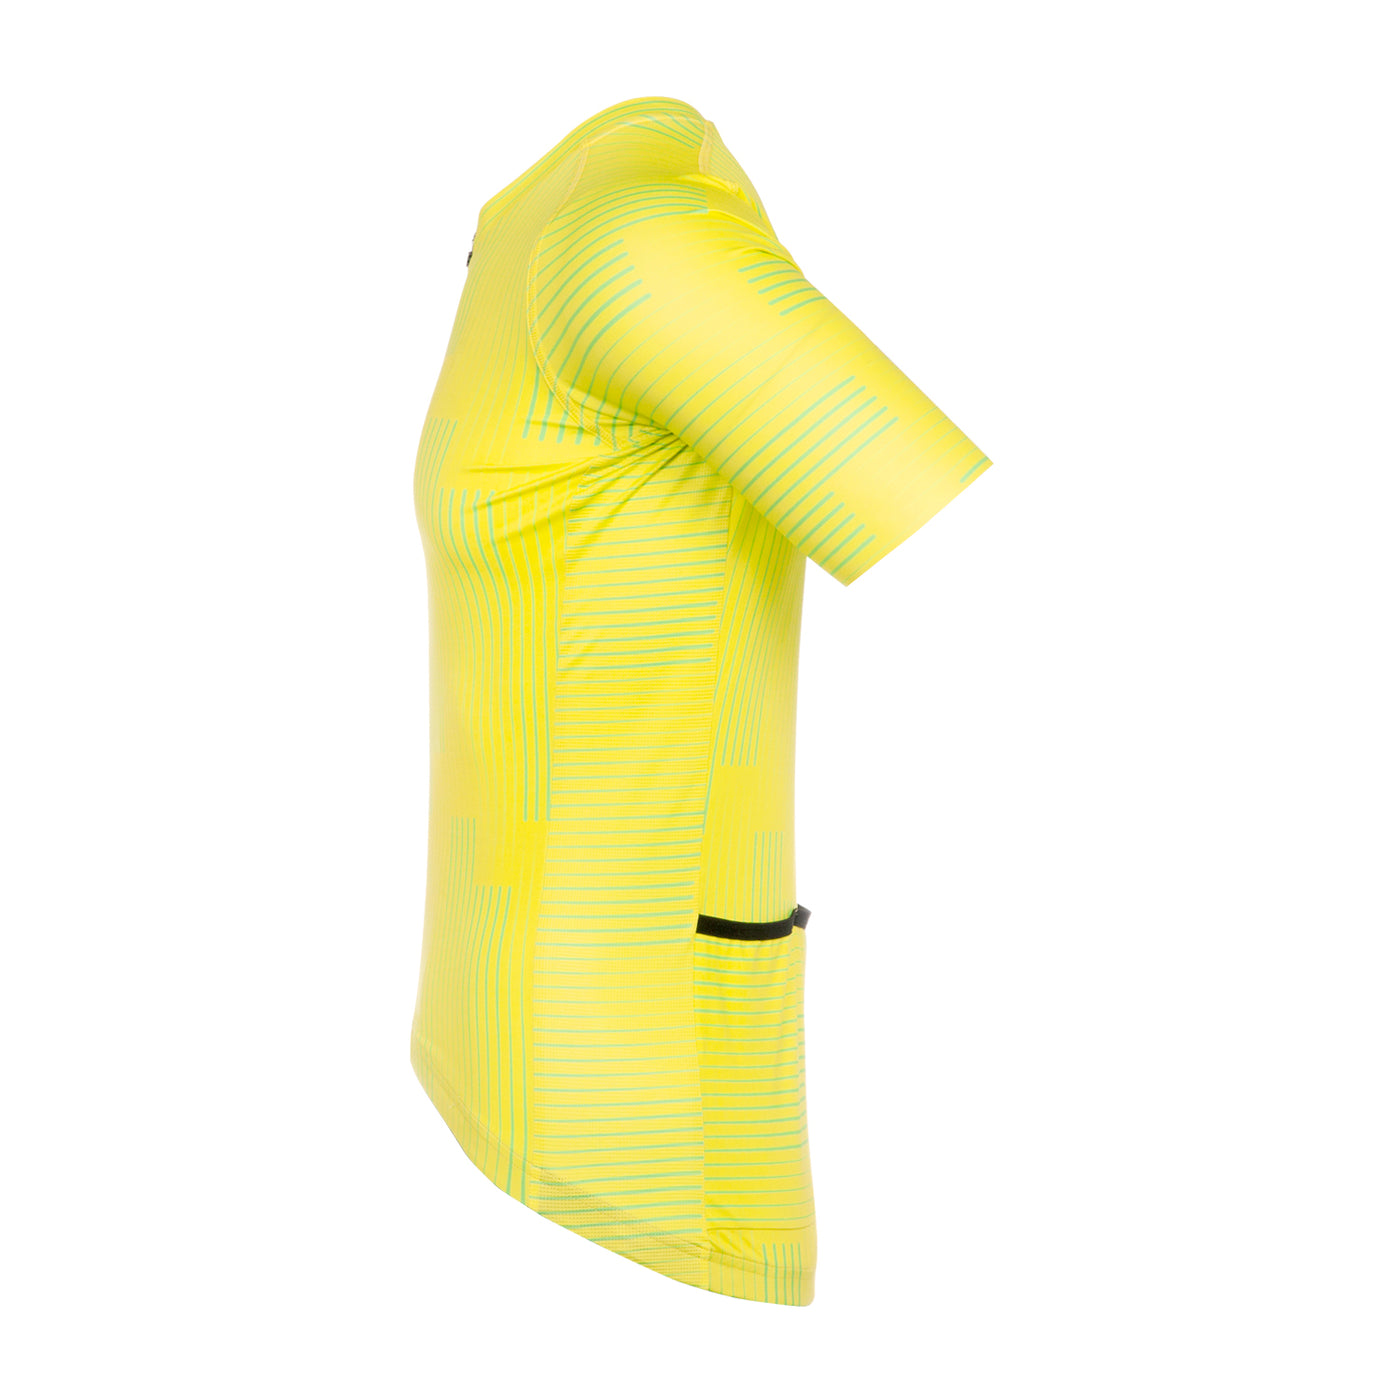 Bioracer Men's Spitfire Jersey - Wrap Citron Yellow - Cyclop.in